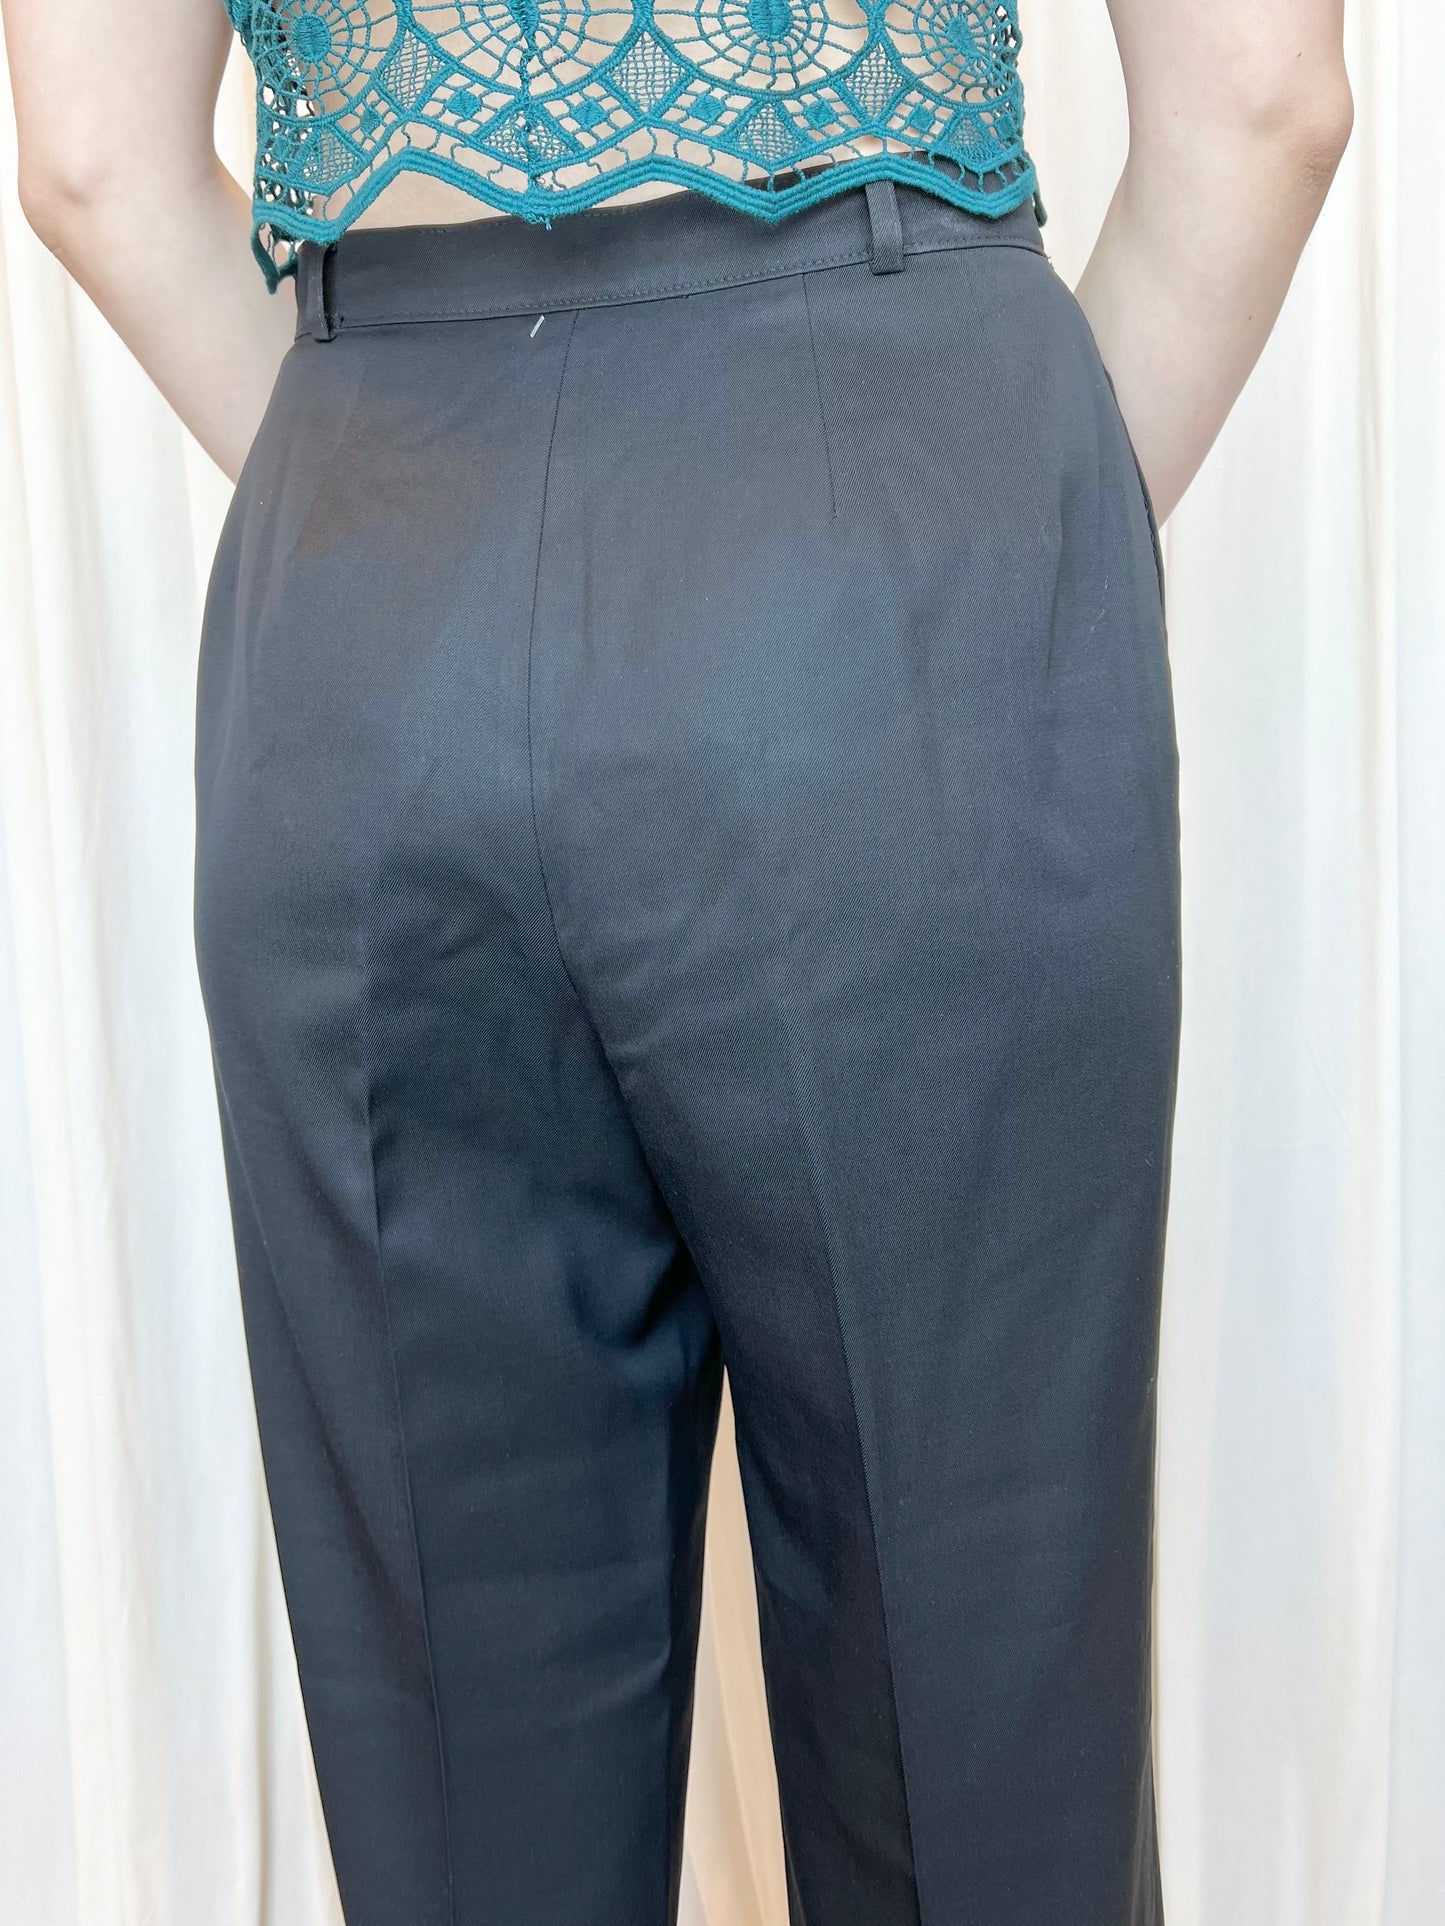 Vintage Shiny Black Dress Pants - 12